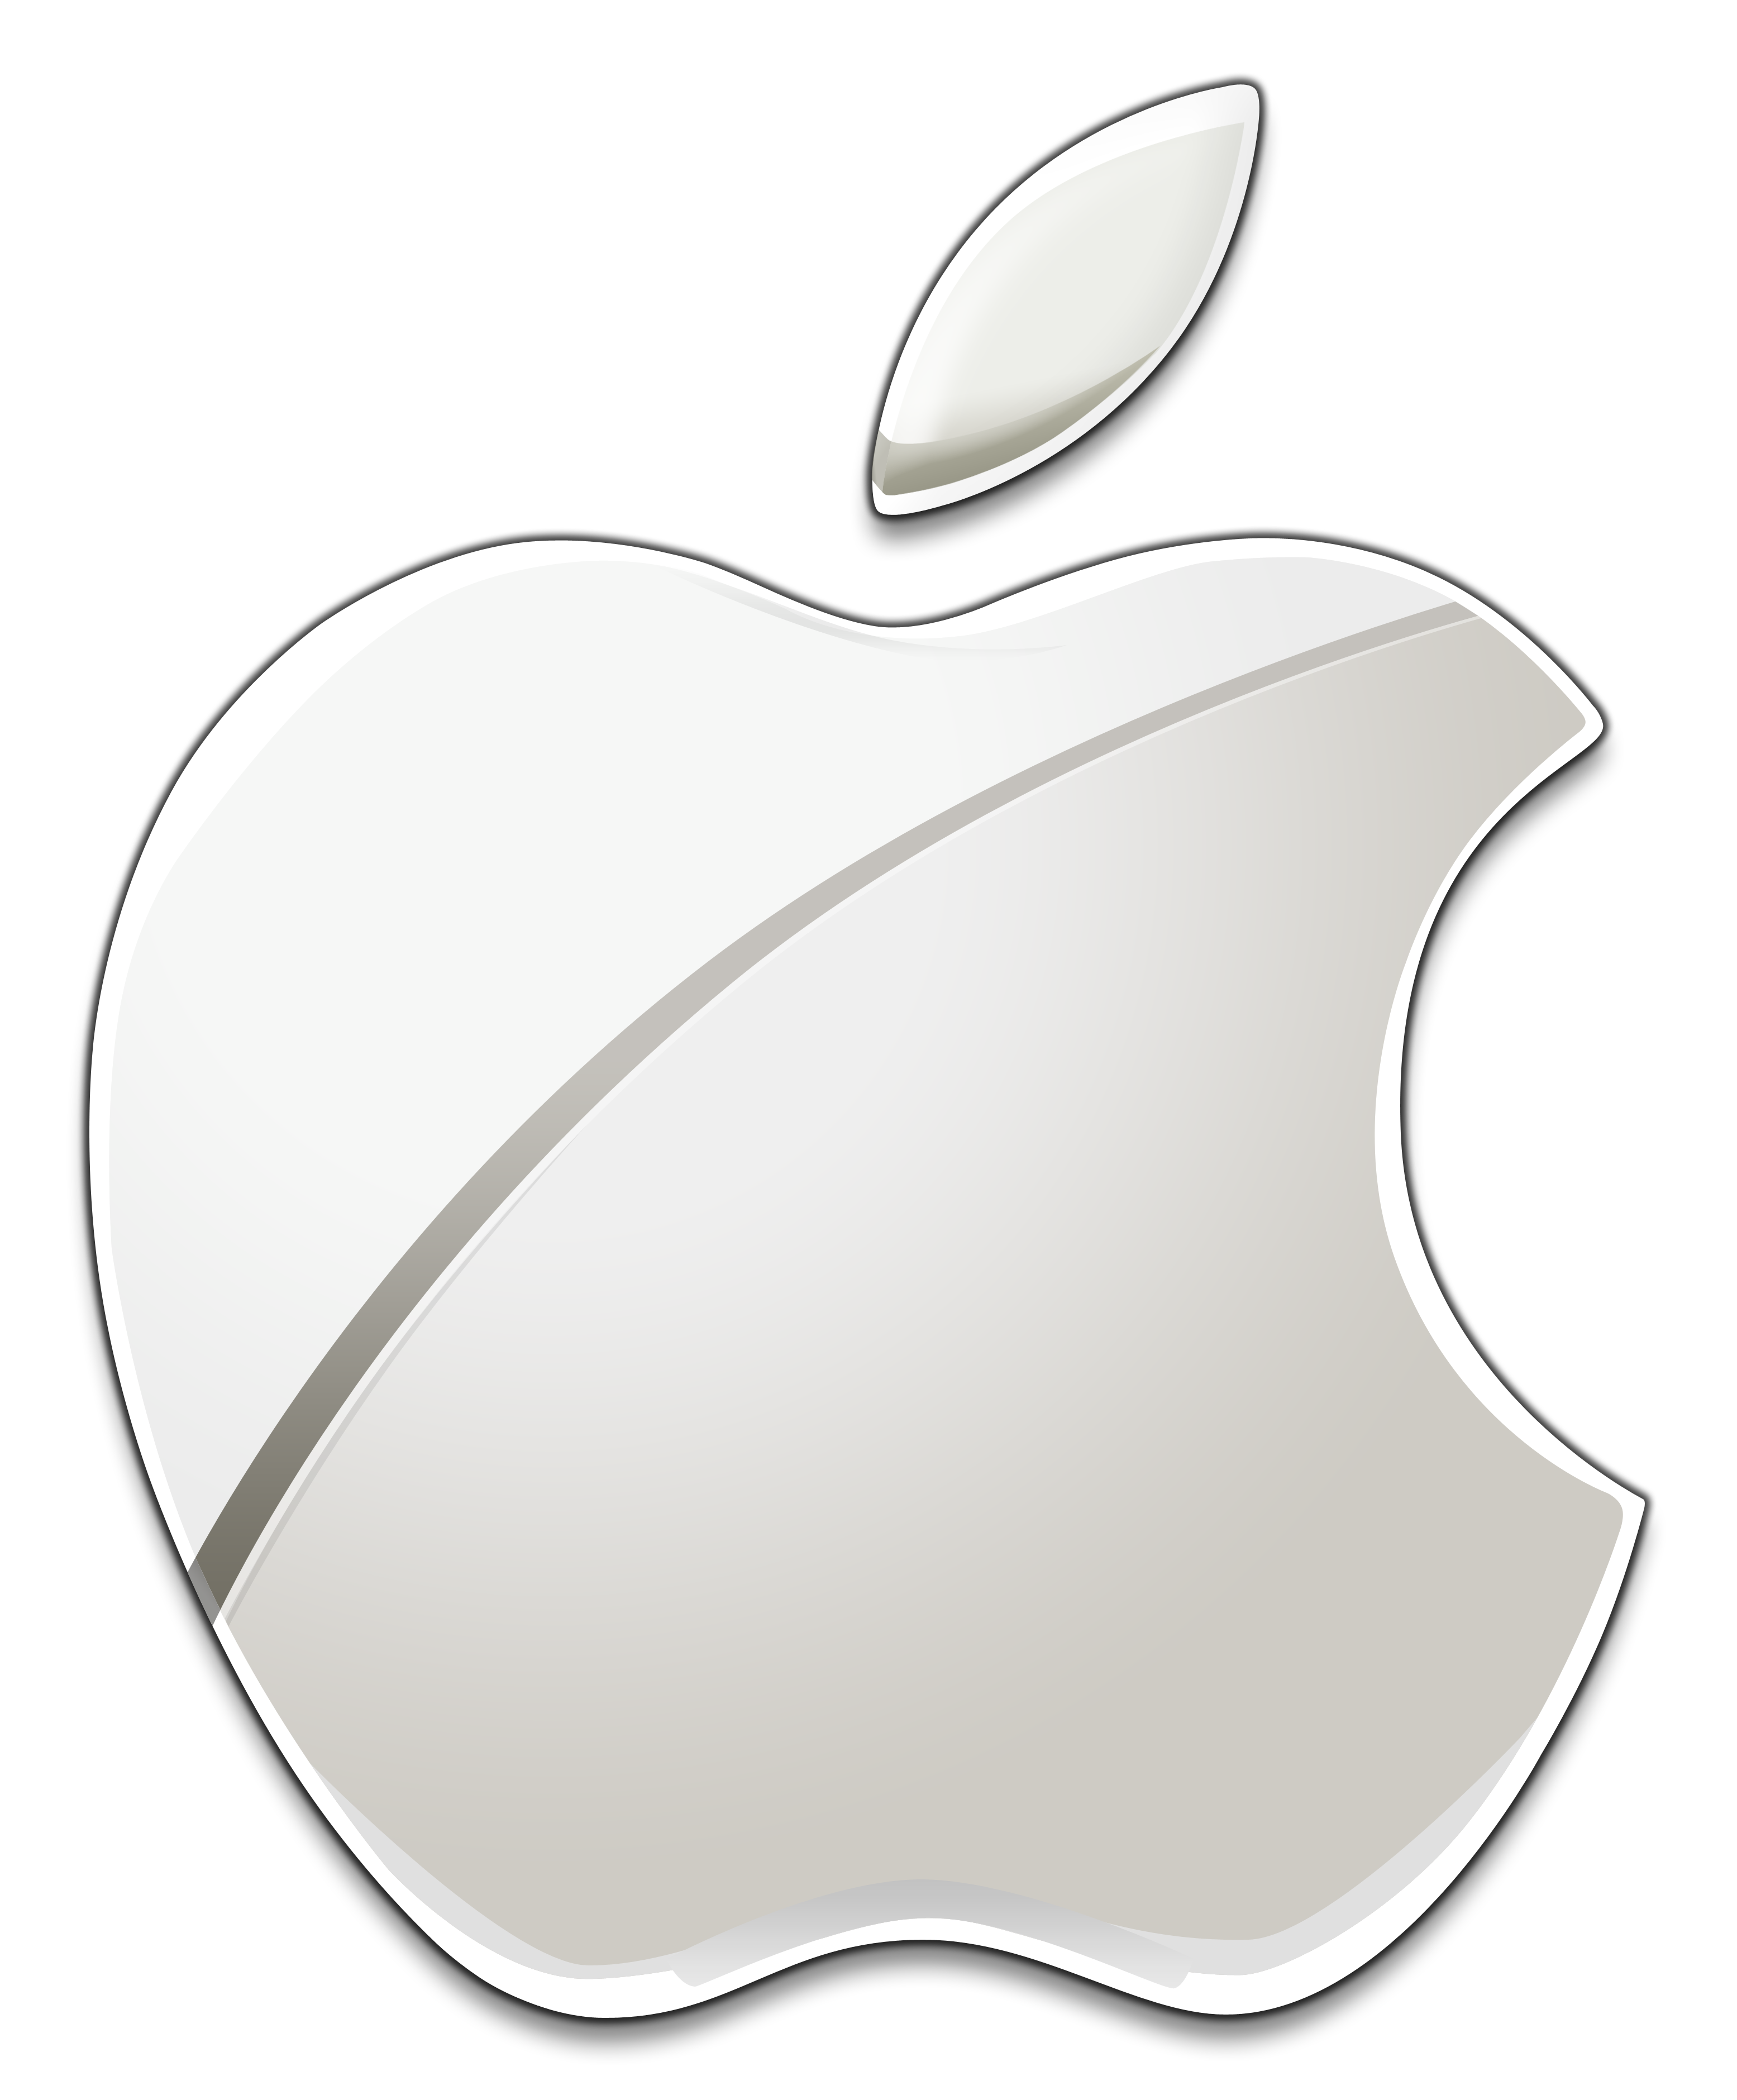 Black Apple Logo Transparent Background   Clipart Best